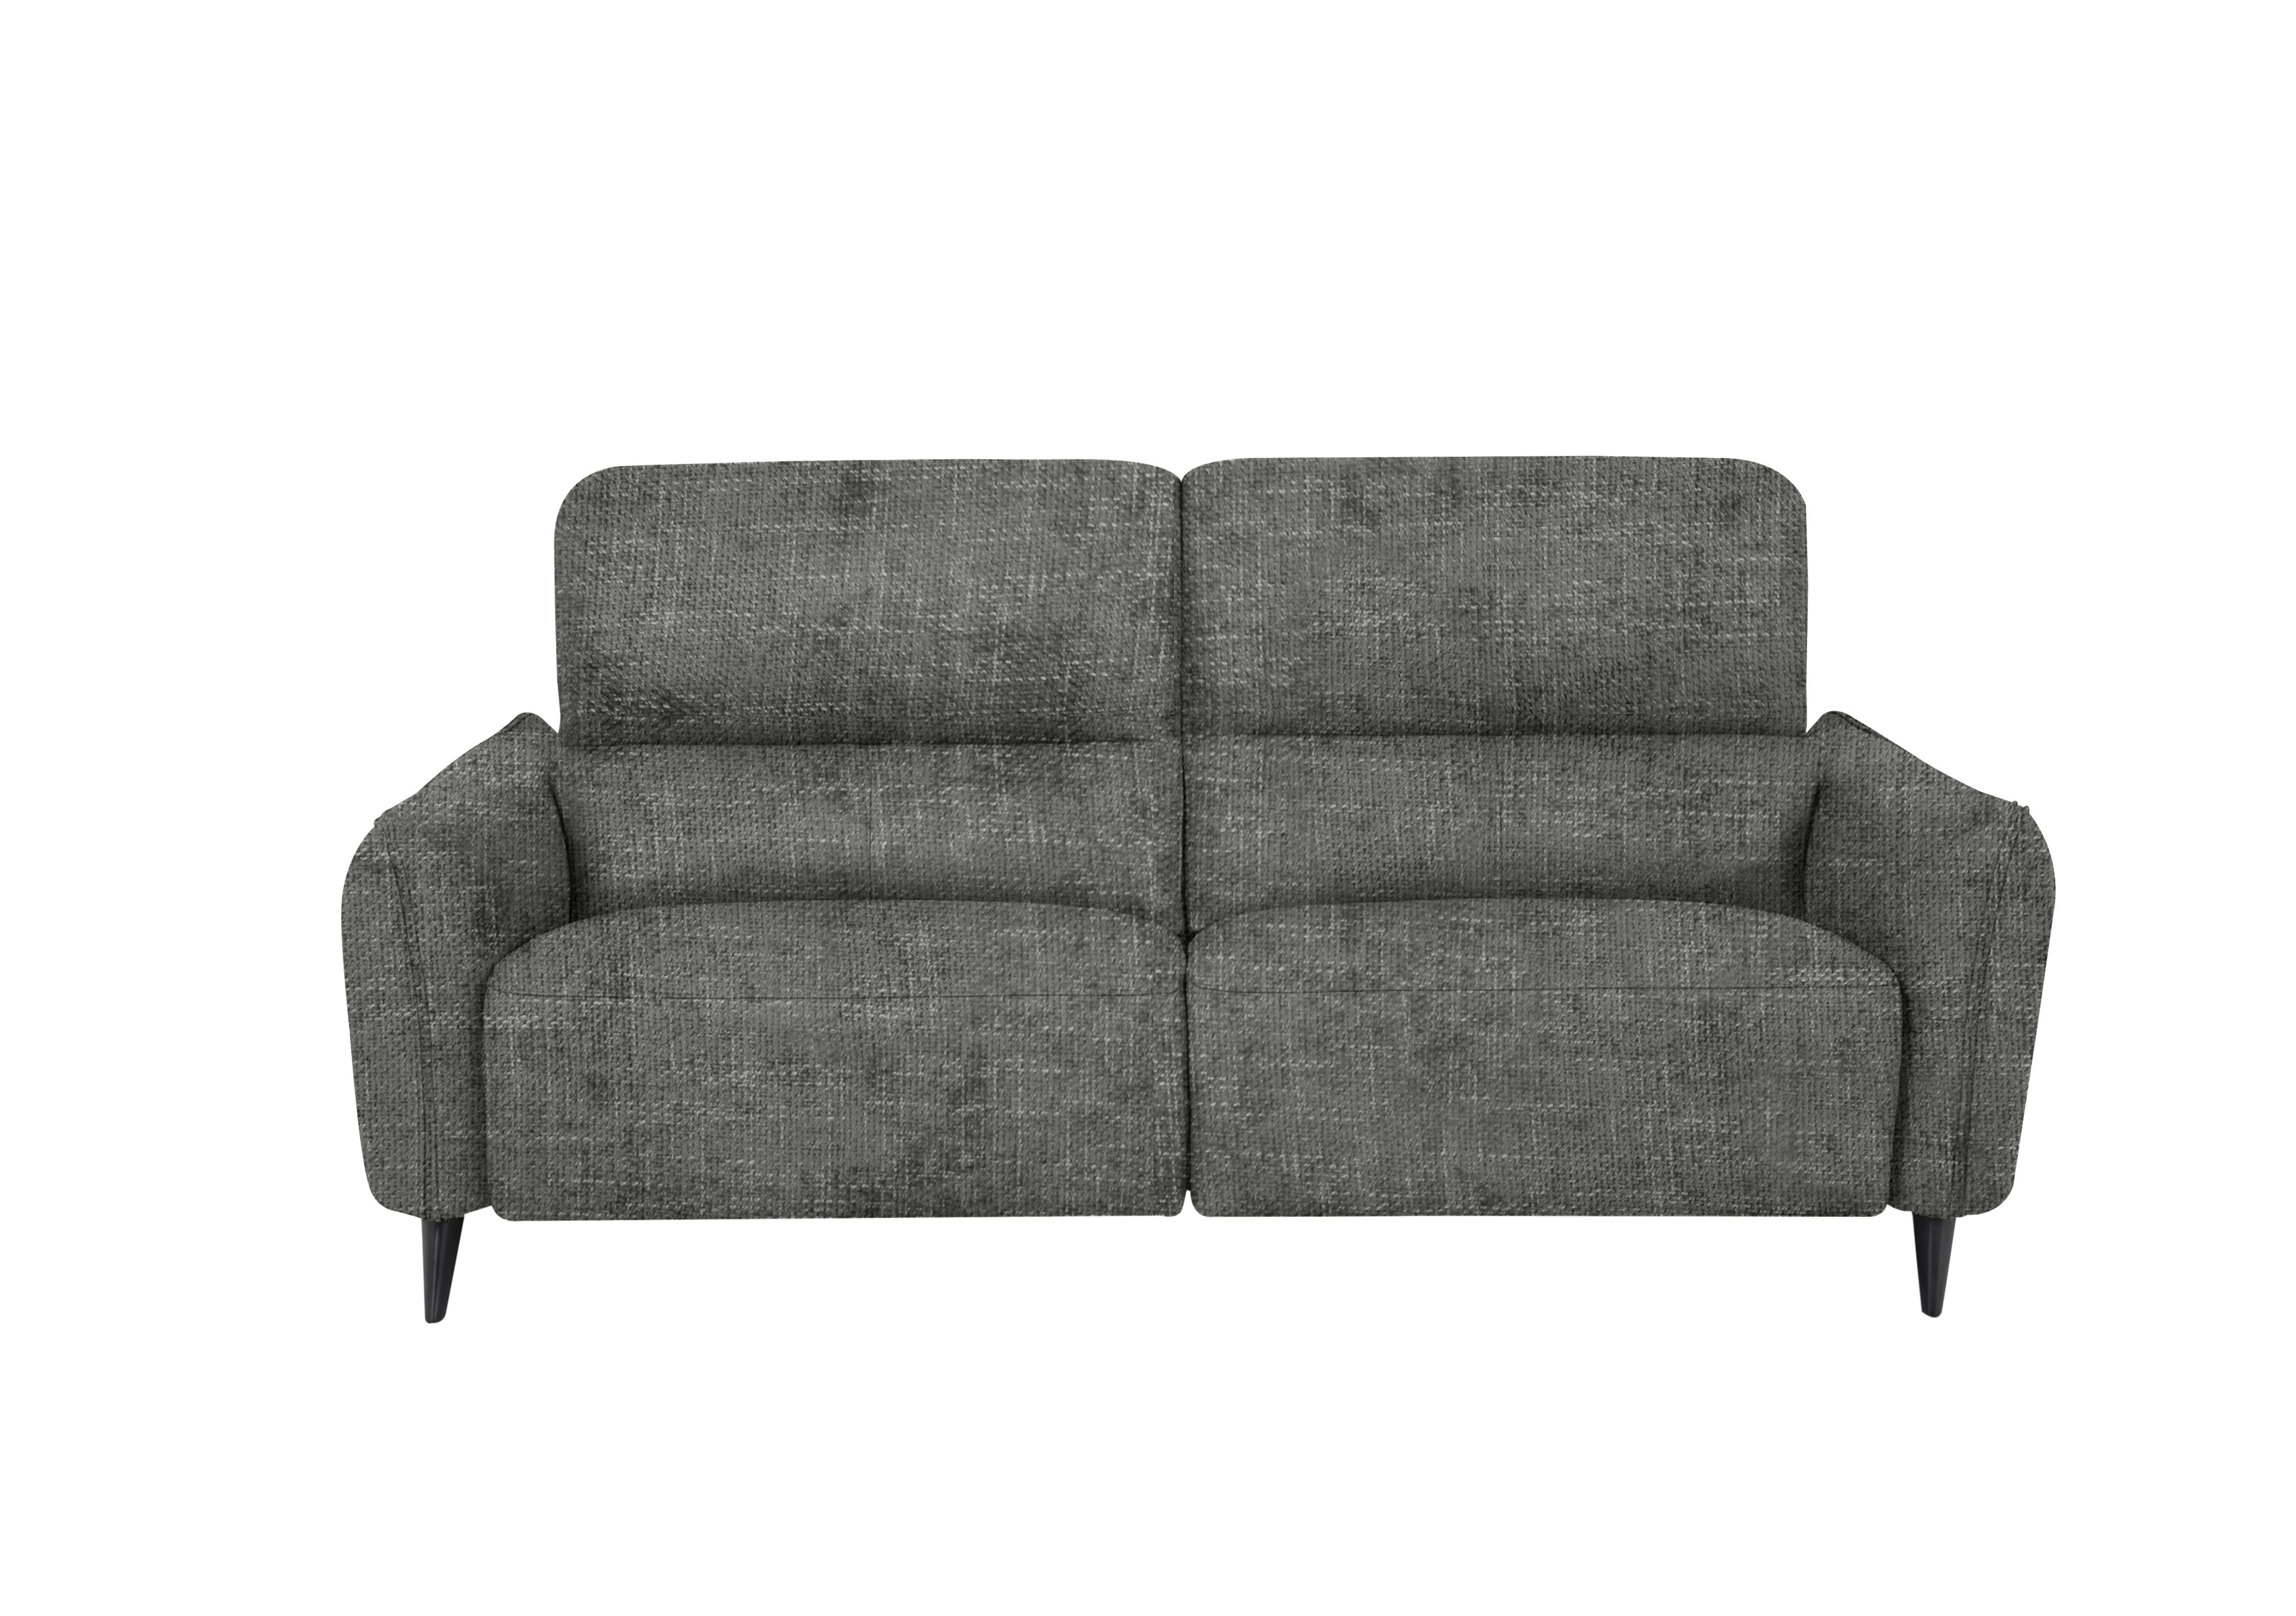 Maddox 3 Seater Fabric Sofa in Fab-Cac-R455 Ash on Furniture Village